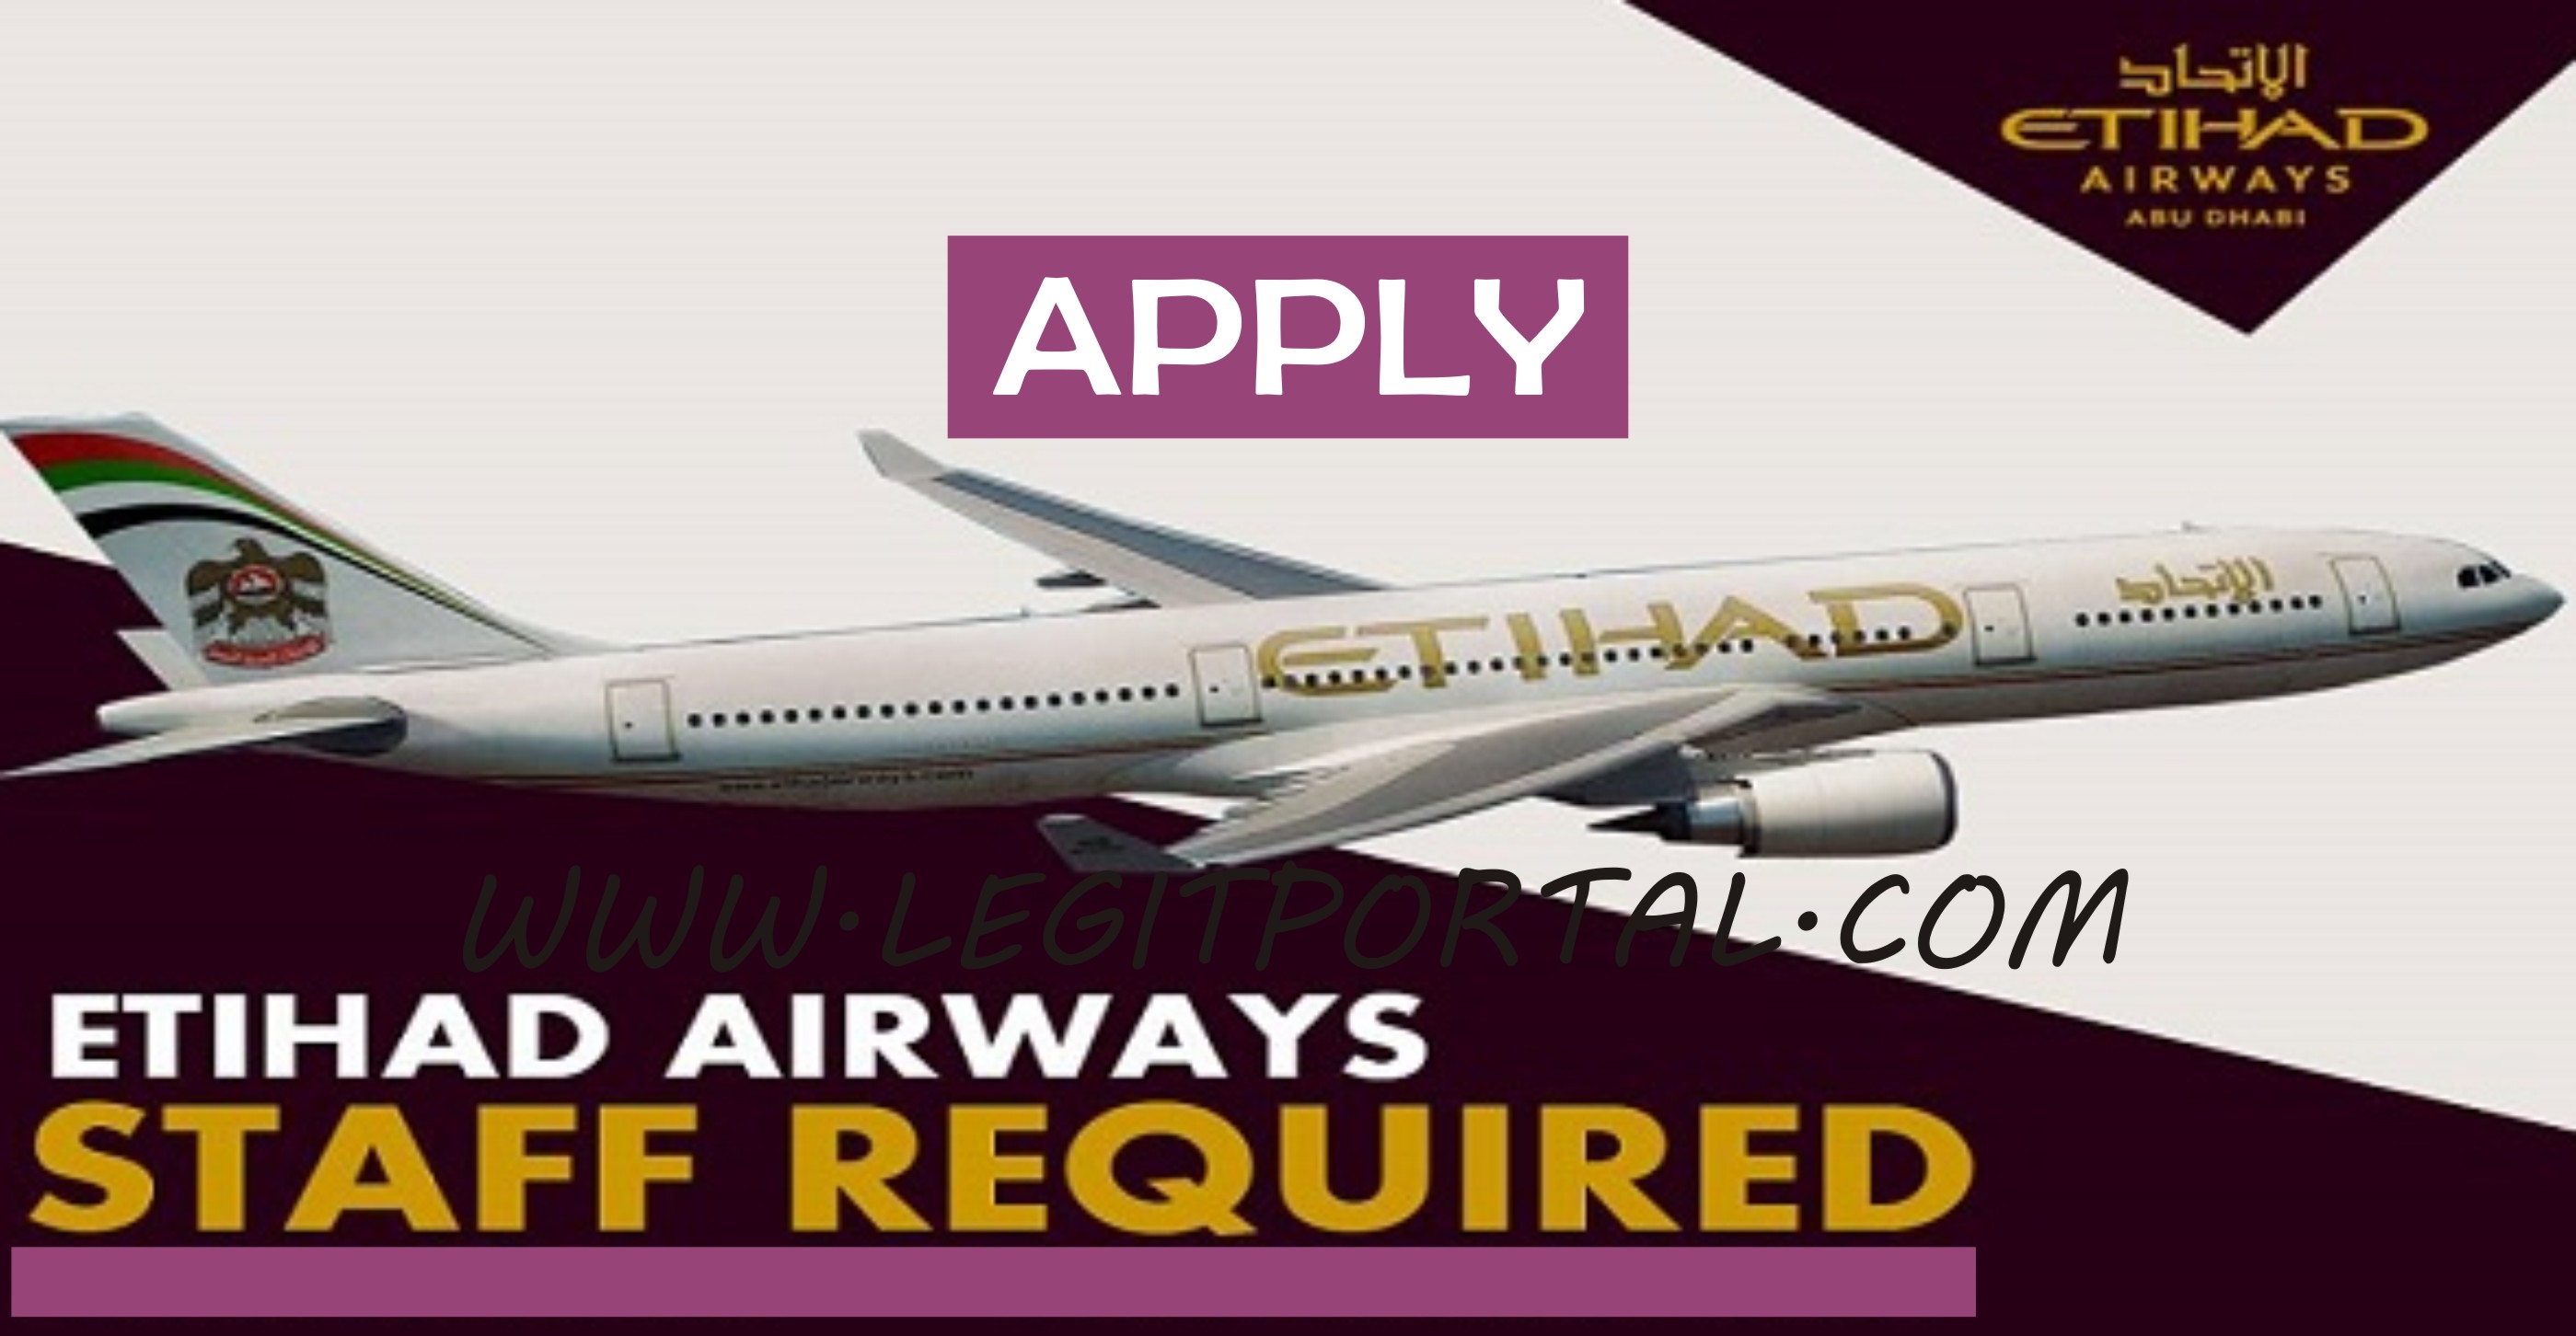 How to Apply for Etihad Airways Sales Rep 2019 Recruitment in Nigeria